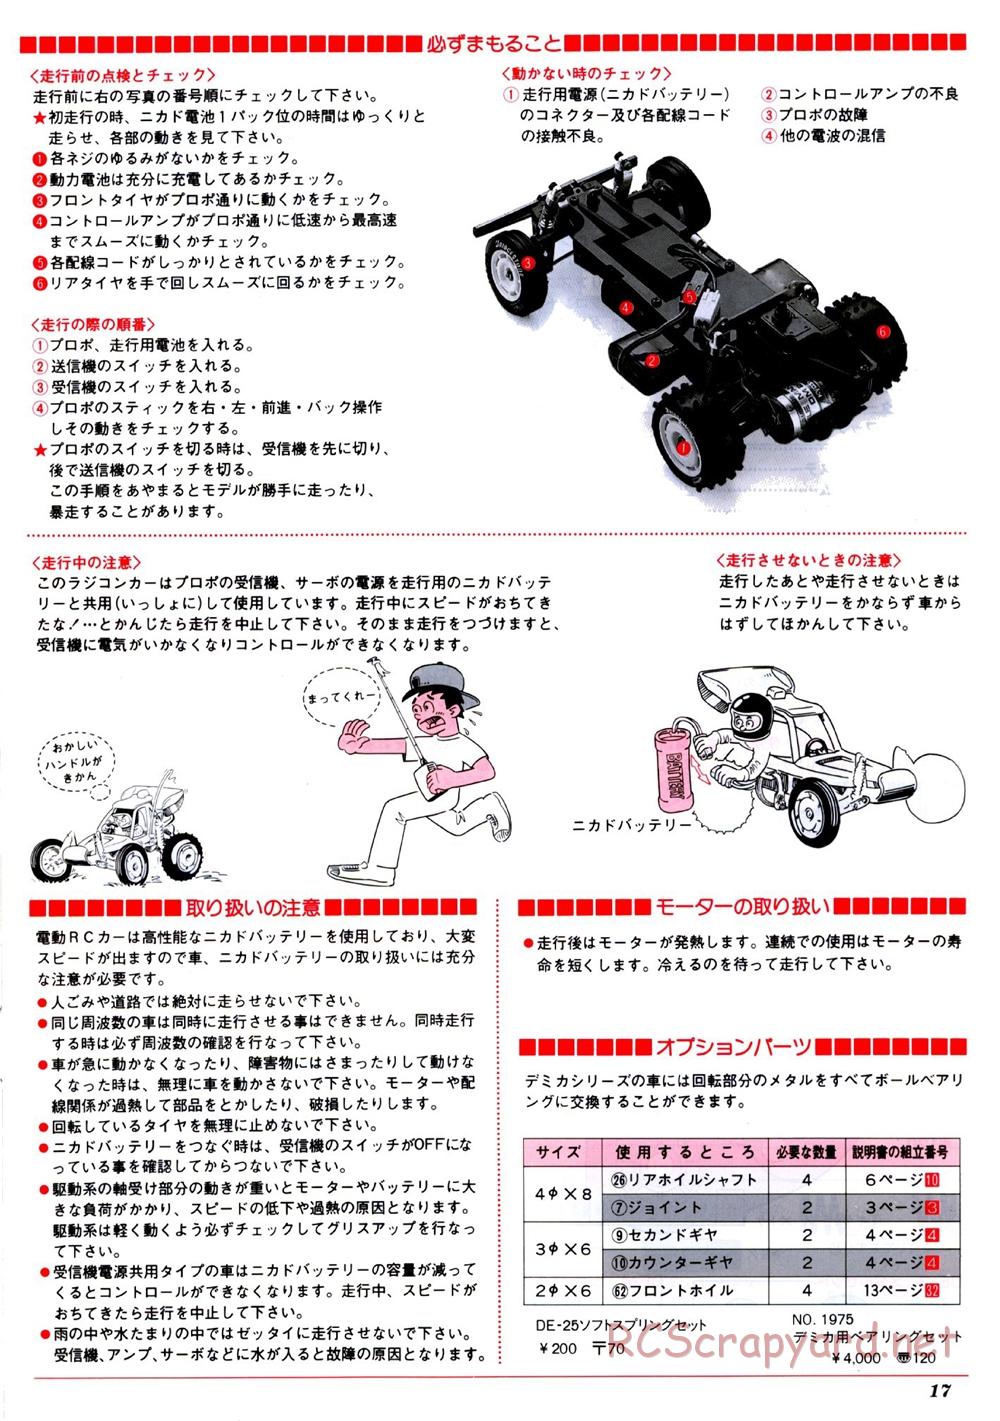 Kyosho - Baja Bugs - Turbo Optima 2WD - Manual - Page 17